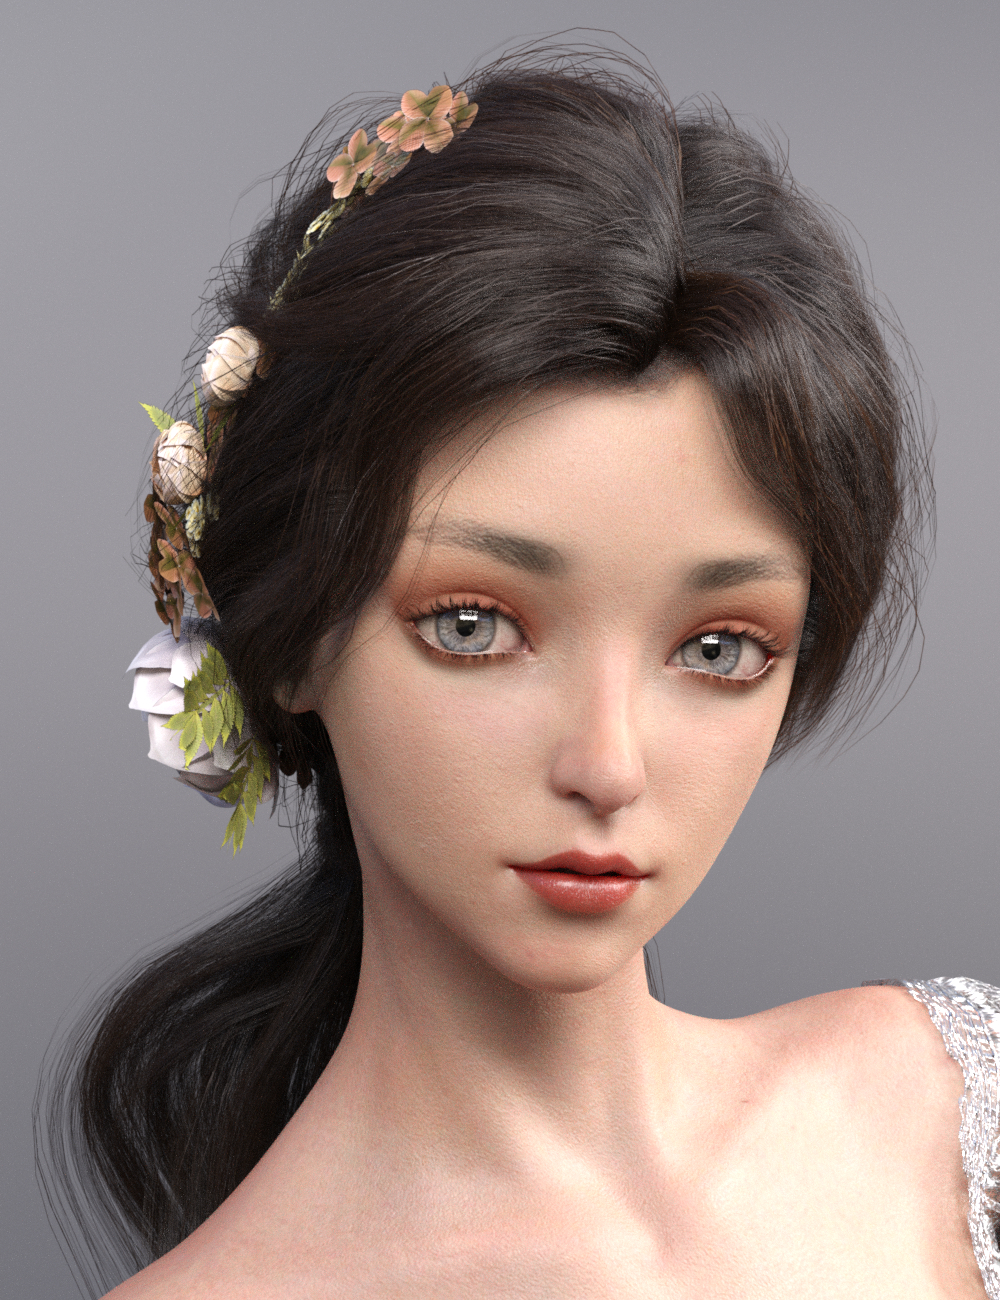 Kent for Genesis 8.1 Female by: Ergou, 3D Models by Daz 3D